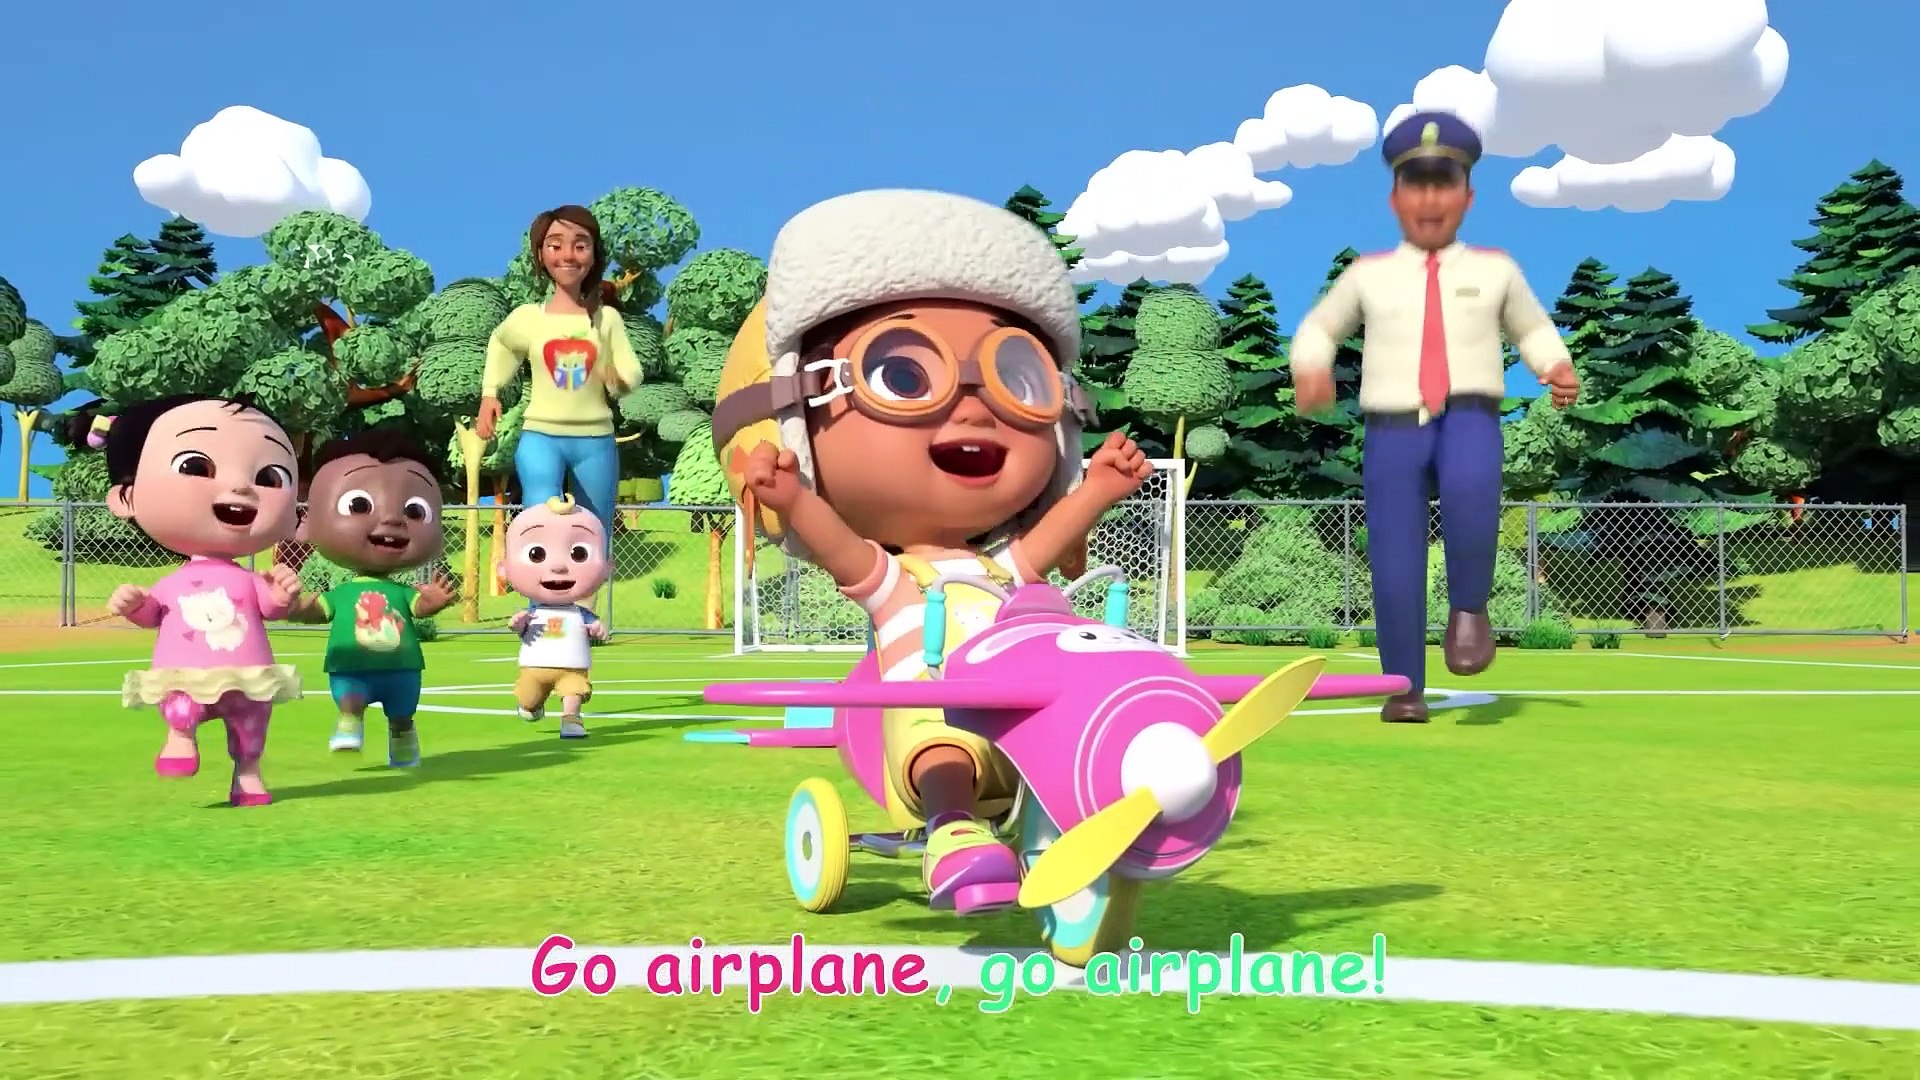 Airplane Song + More Nursery Rhymes & Kids Songs - CoComelon 